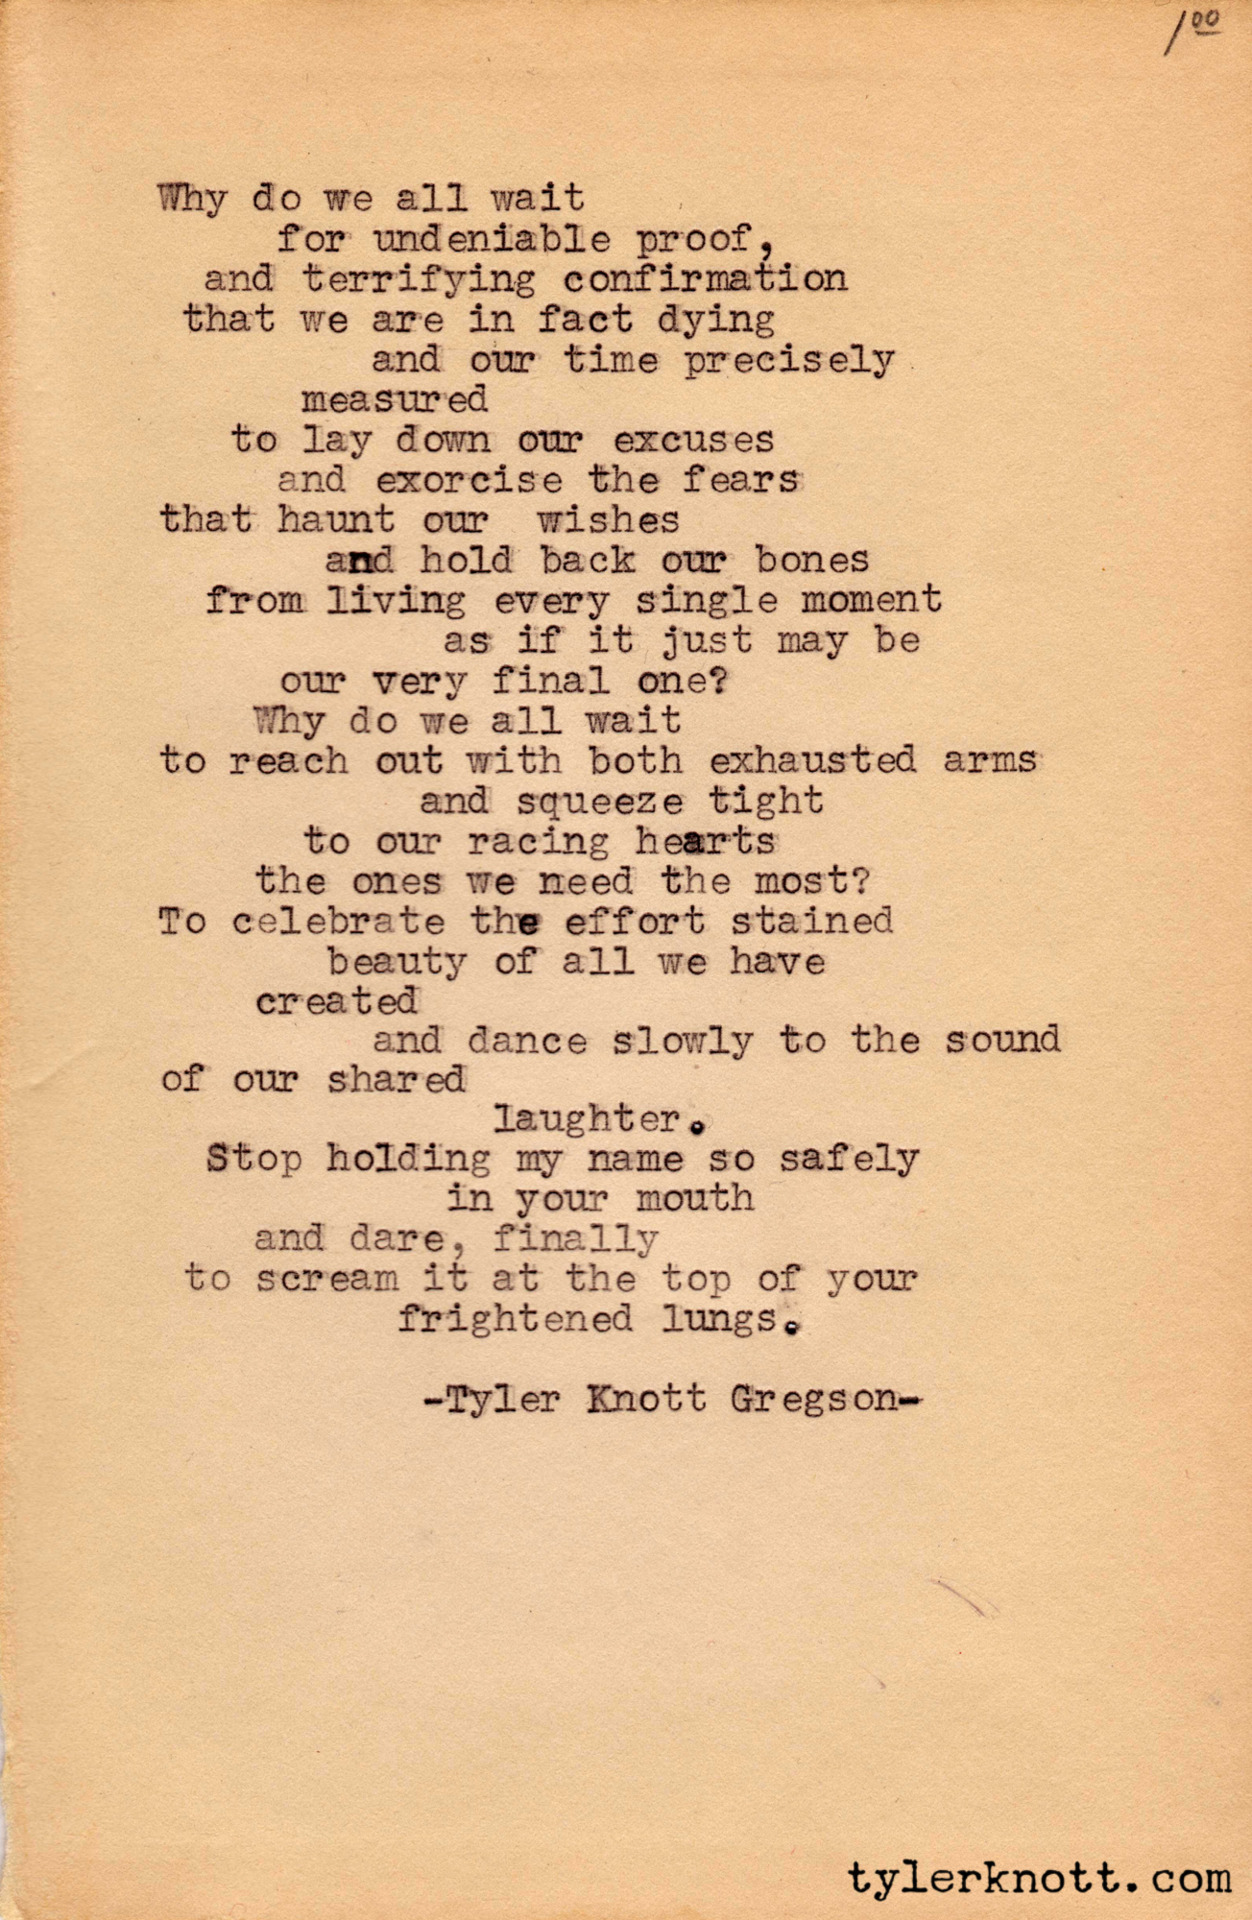 Tyler Knott Gregson — Typewriter Series #6 by Tyler Knott Gregson